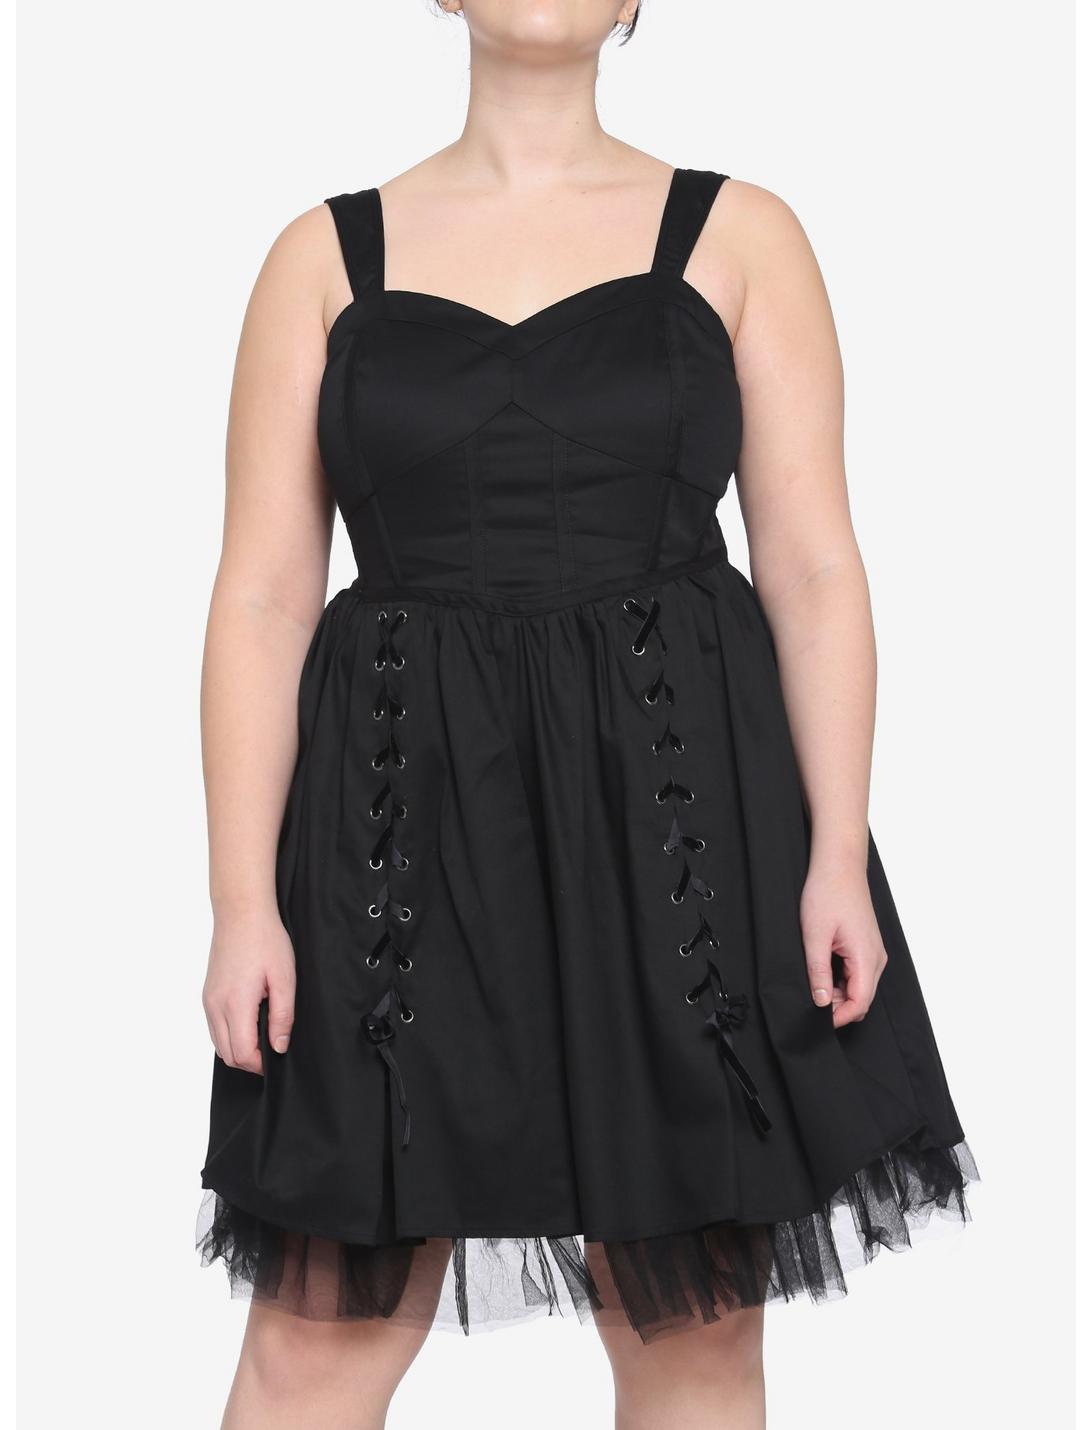 Black Corset Dress Plus Size, BLACK, hi-res